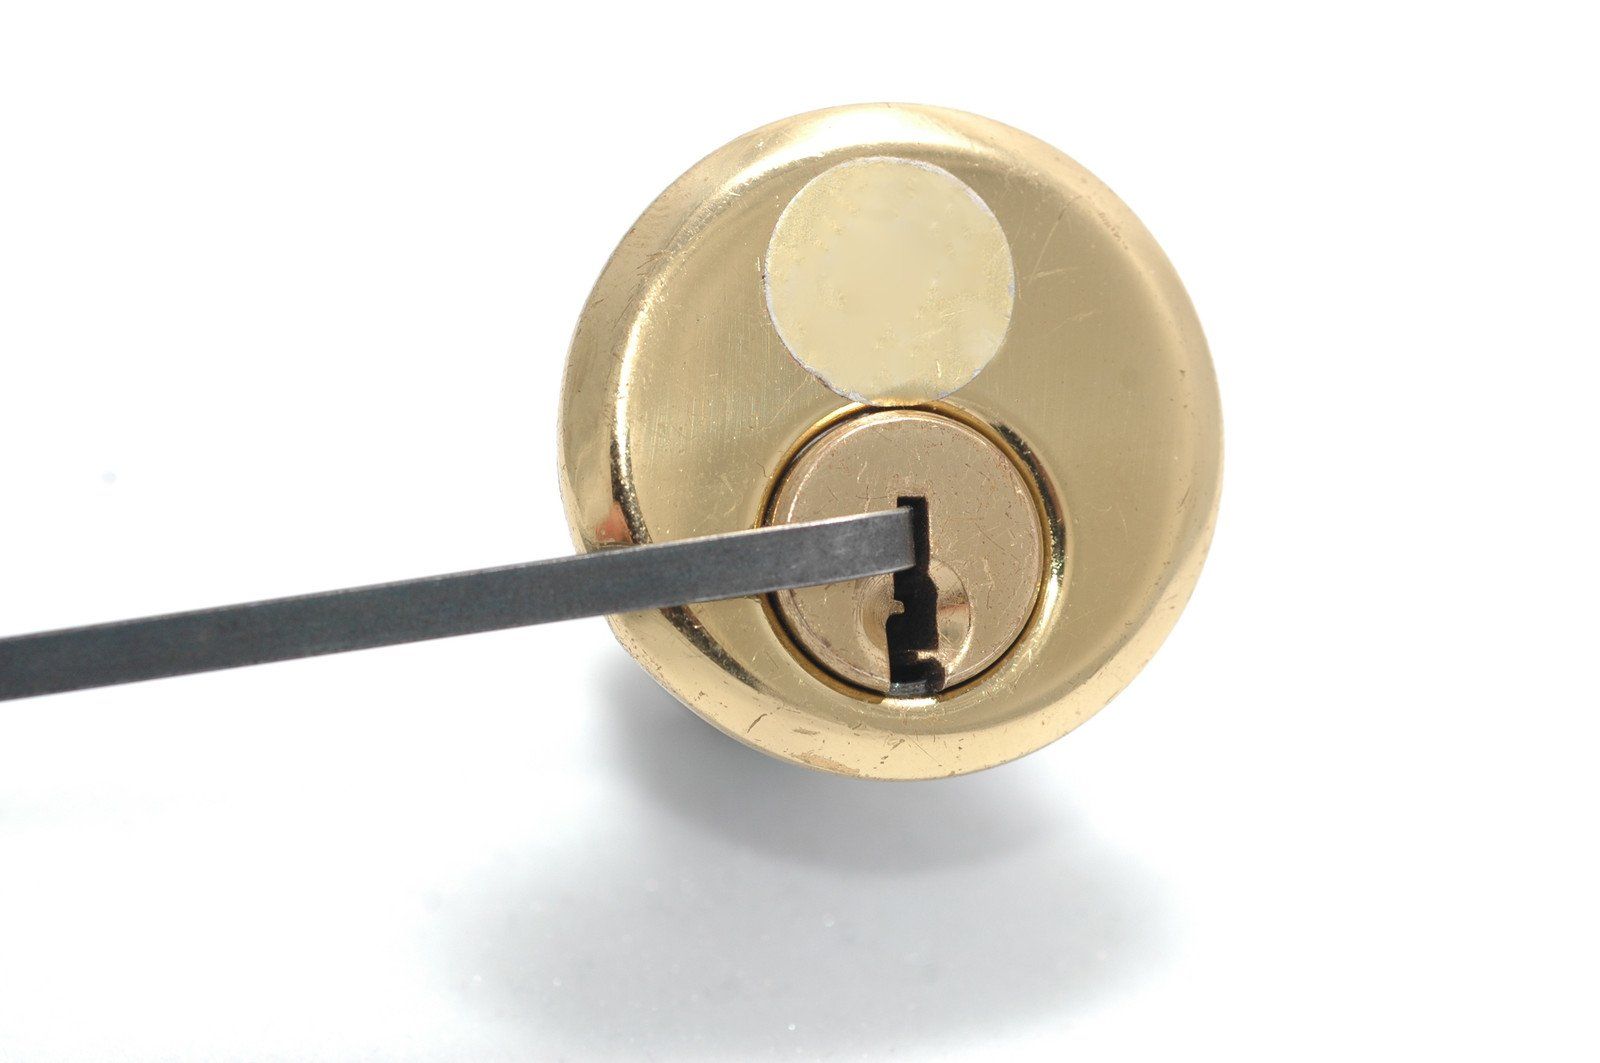 lock opening, lock picking and lock drilling